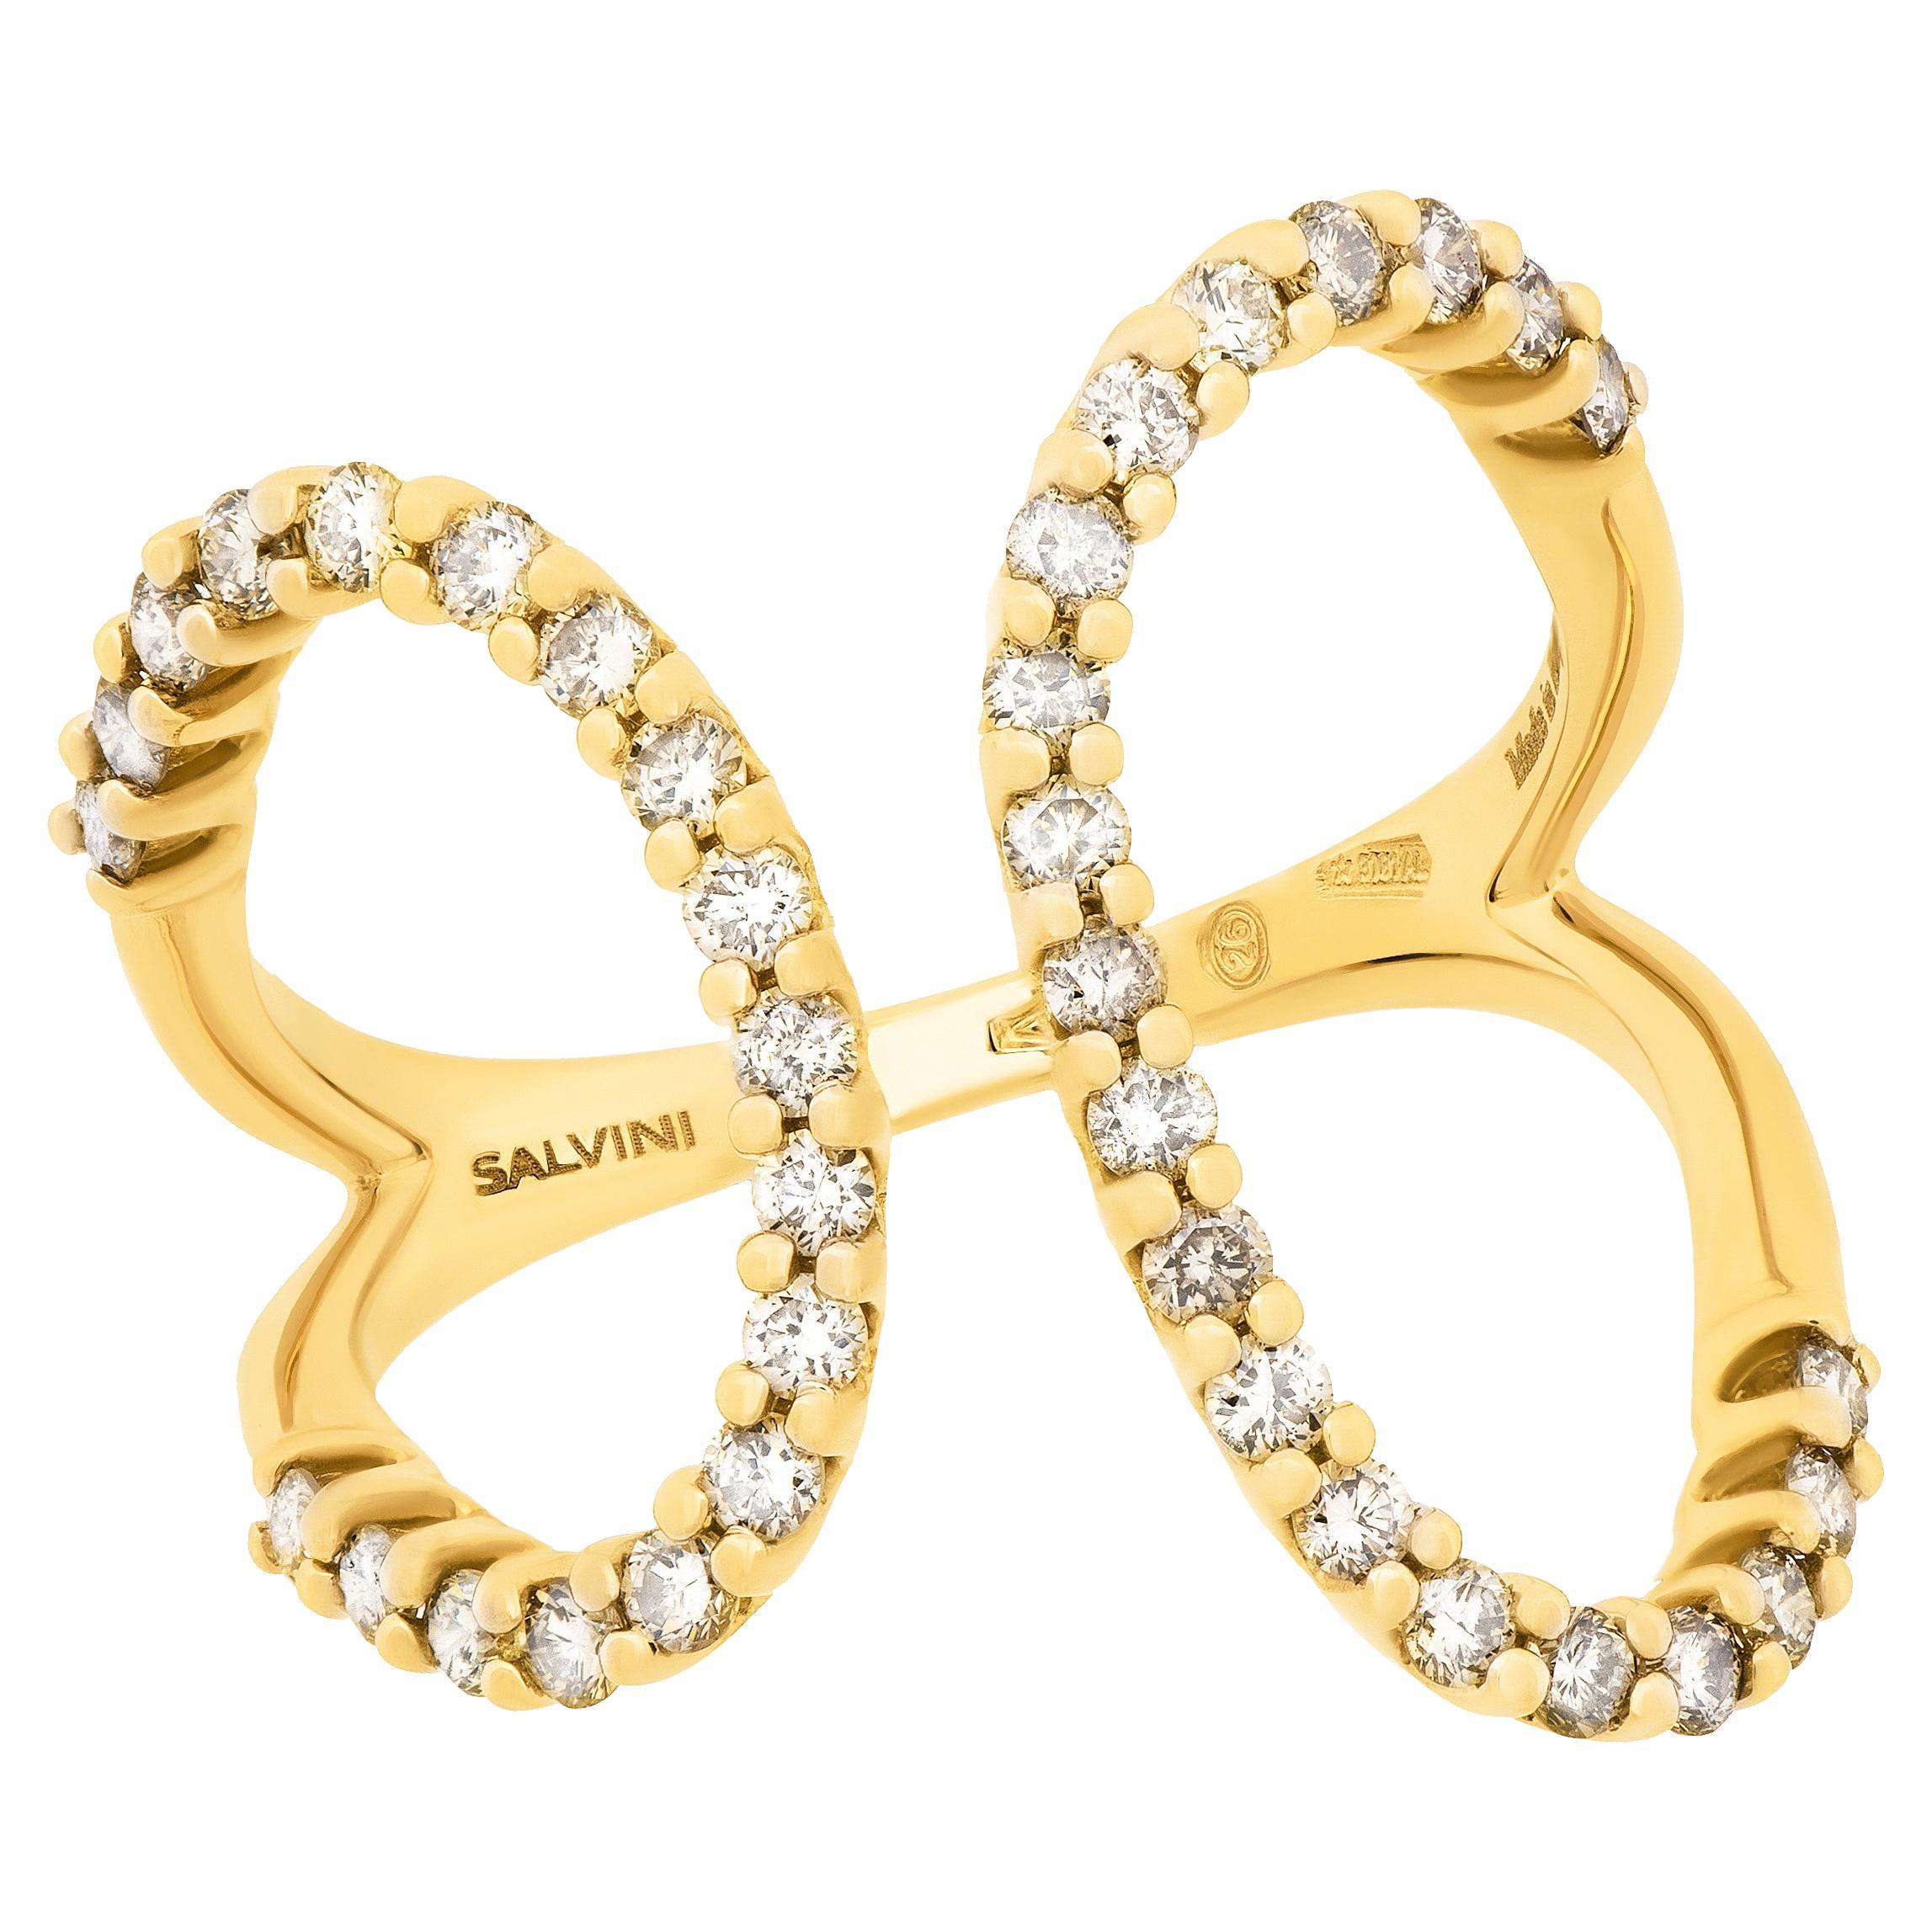 SALVINI 18K Yellow Gold, Diamond Wrap Ring sz 6.5 For Sale